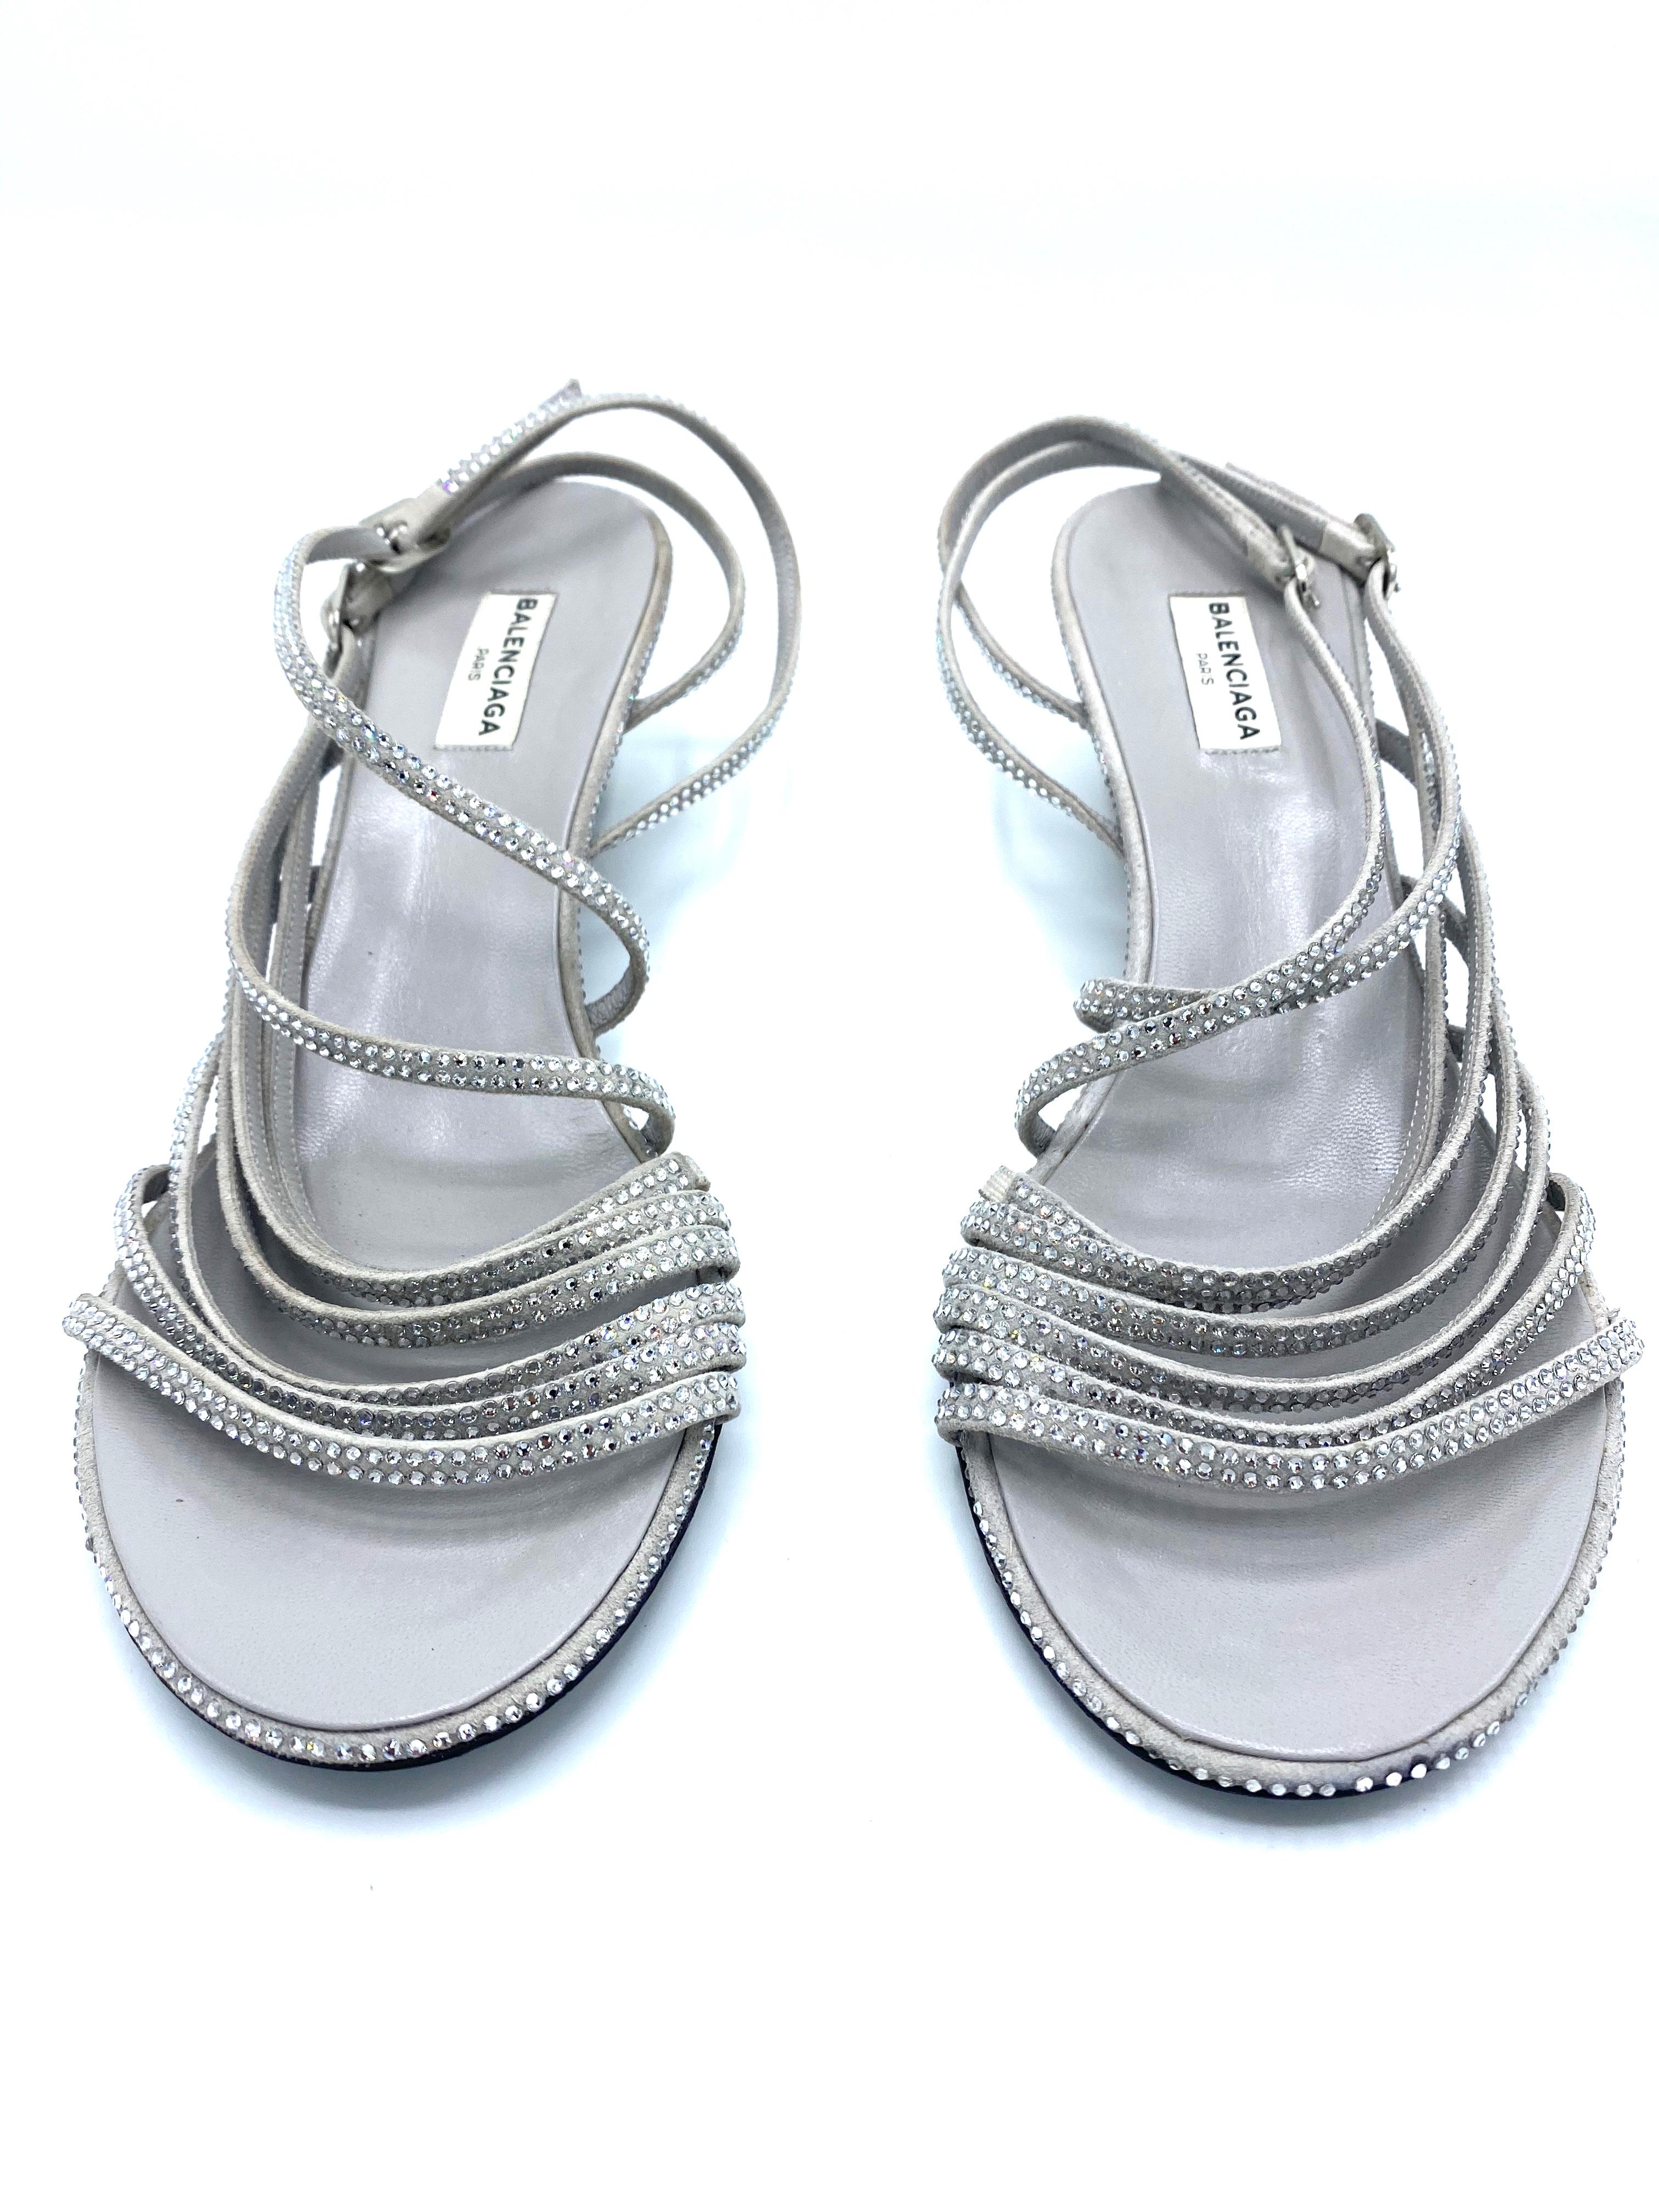 Balenciaga Crystal Embellished Grey Suede Strappy Heels Sandals Size 39  5